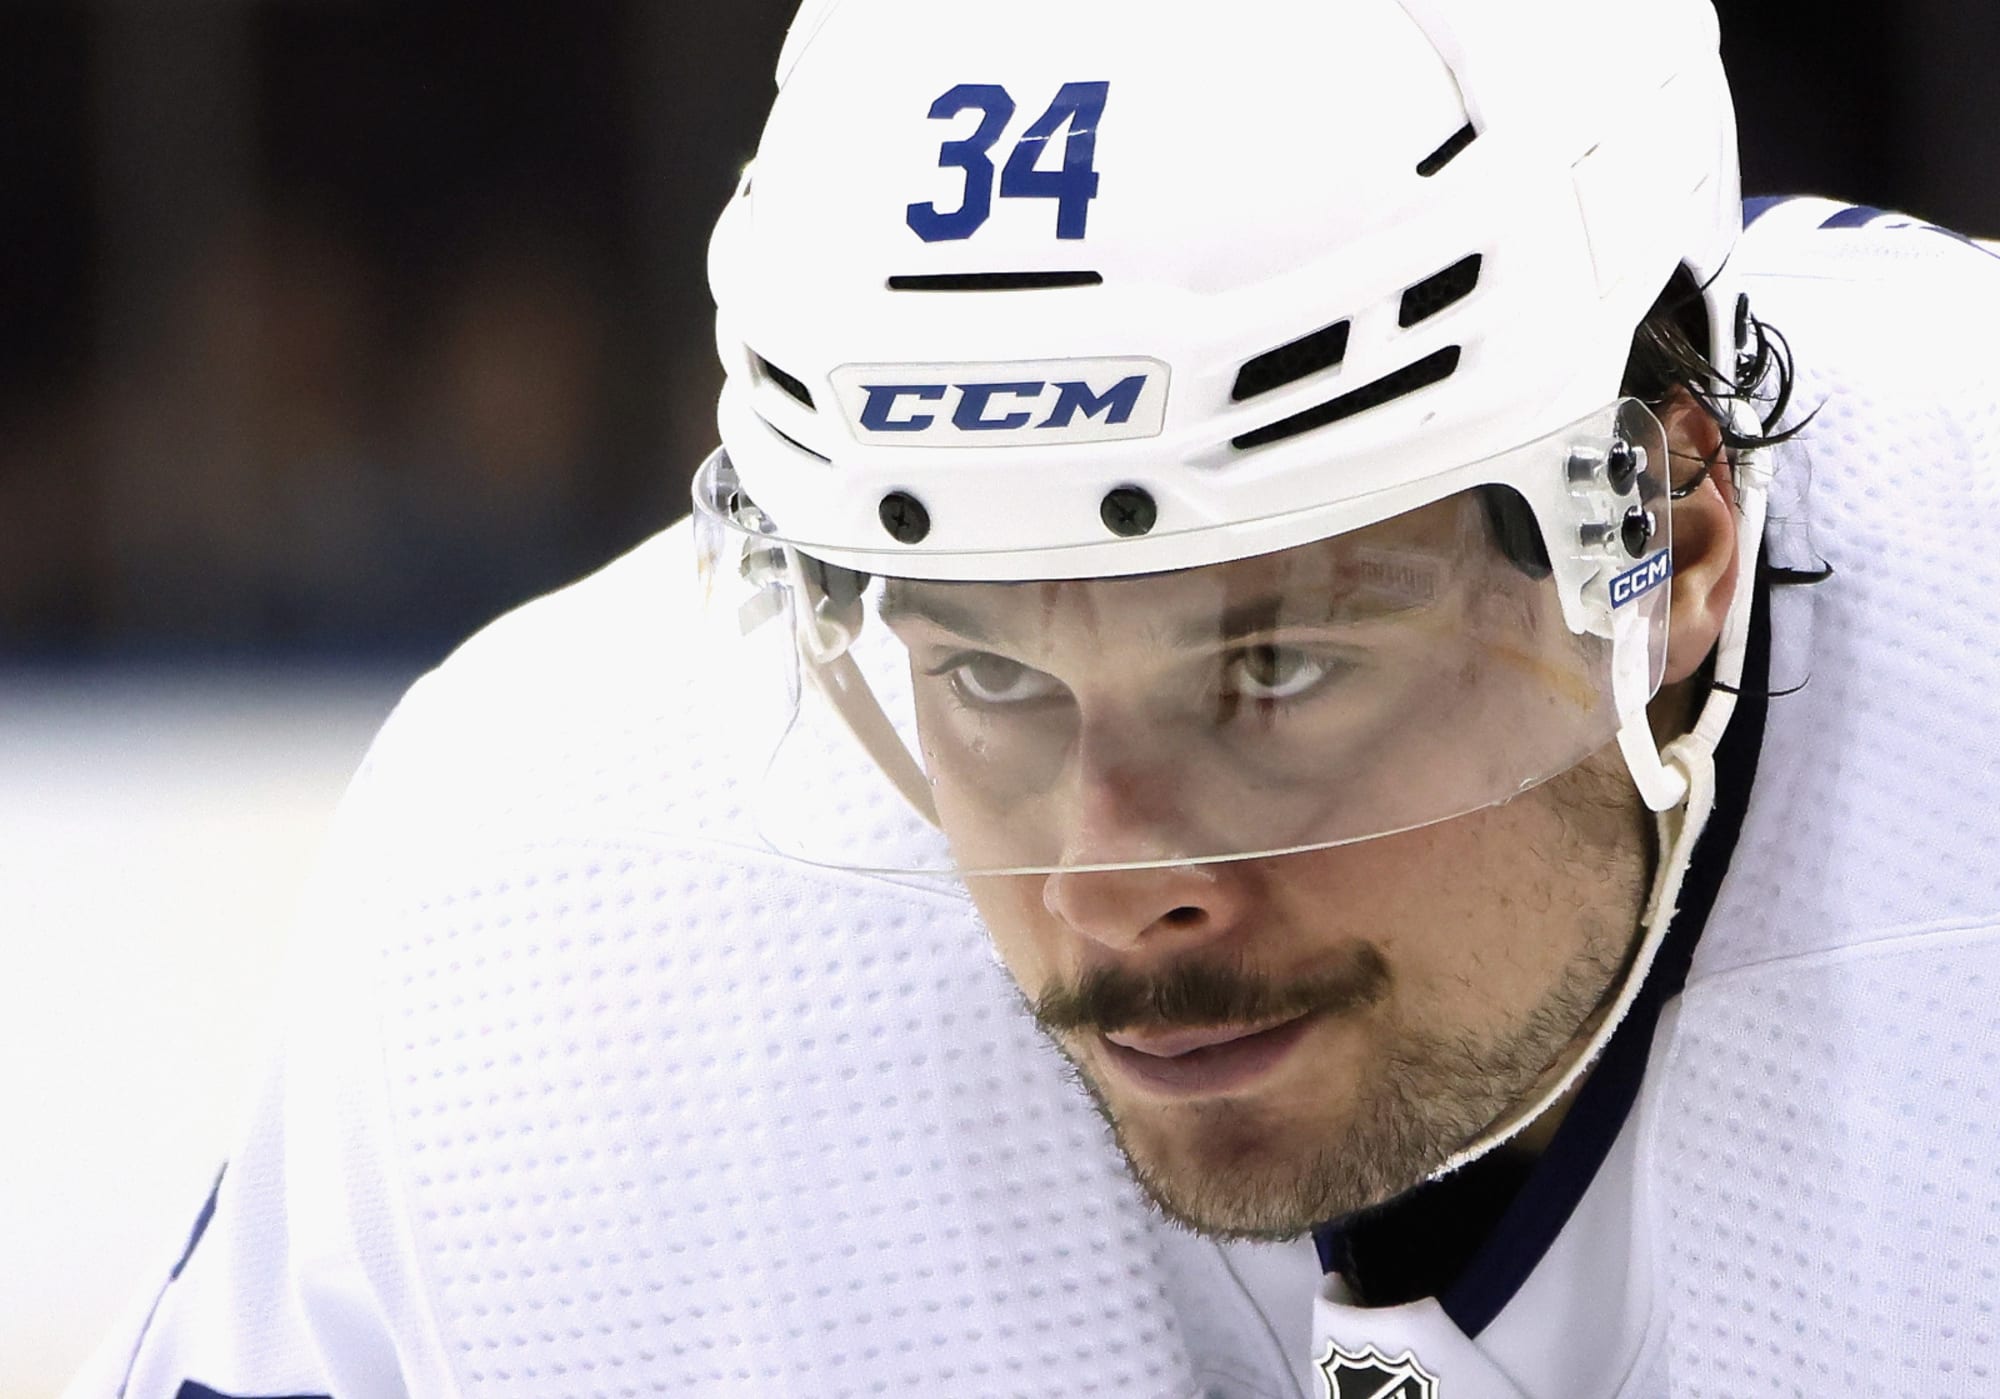 Toronto Maple Leafs' Auston Matthews set to be NHL's highest-paid star